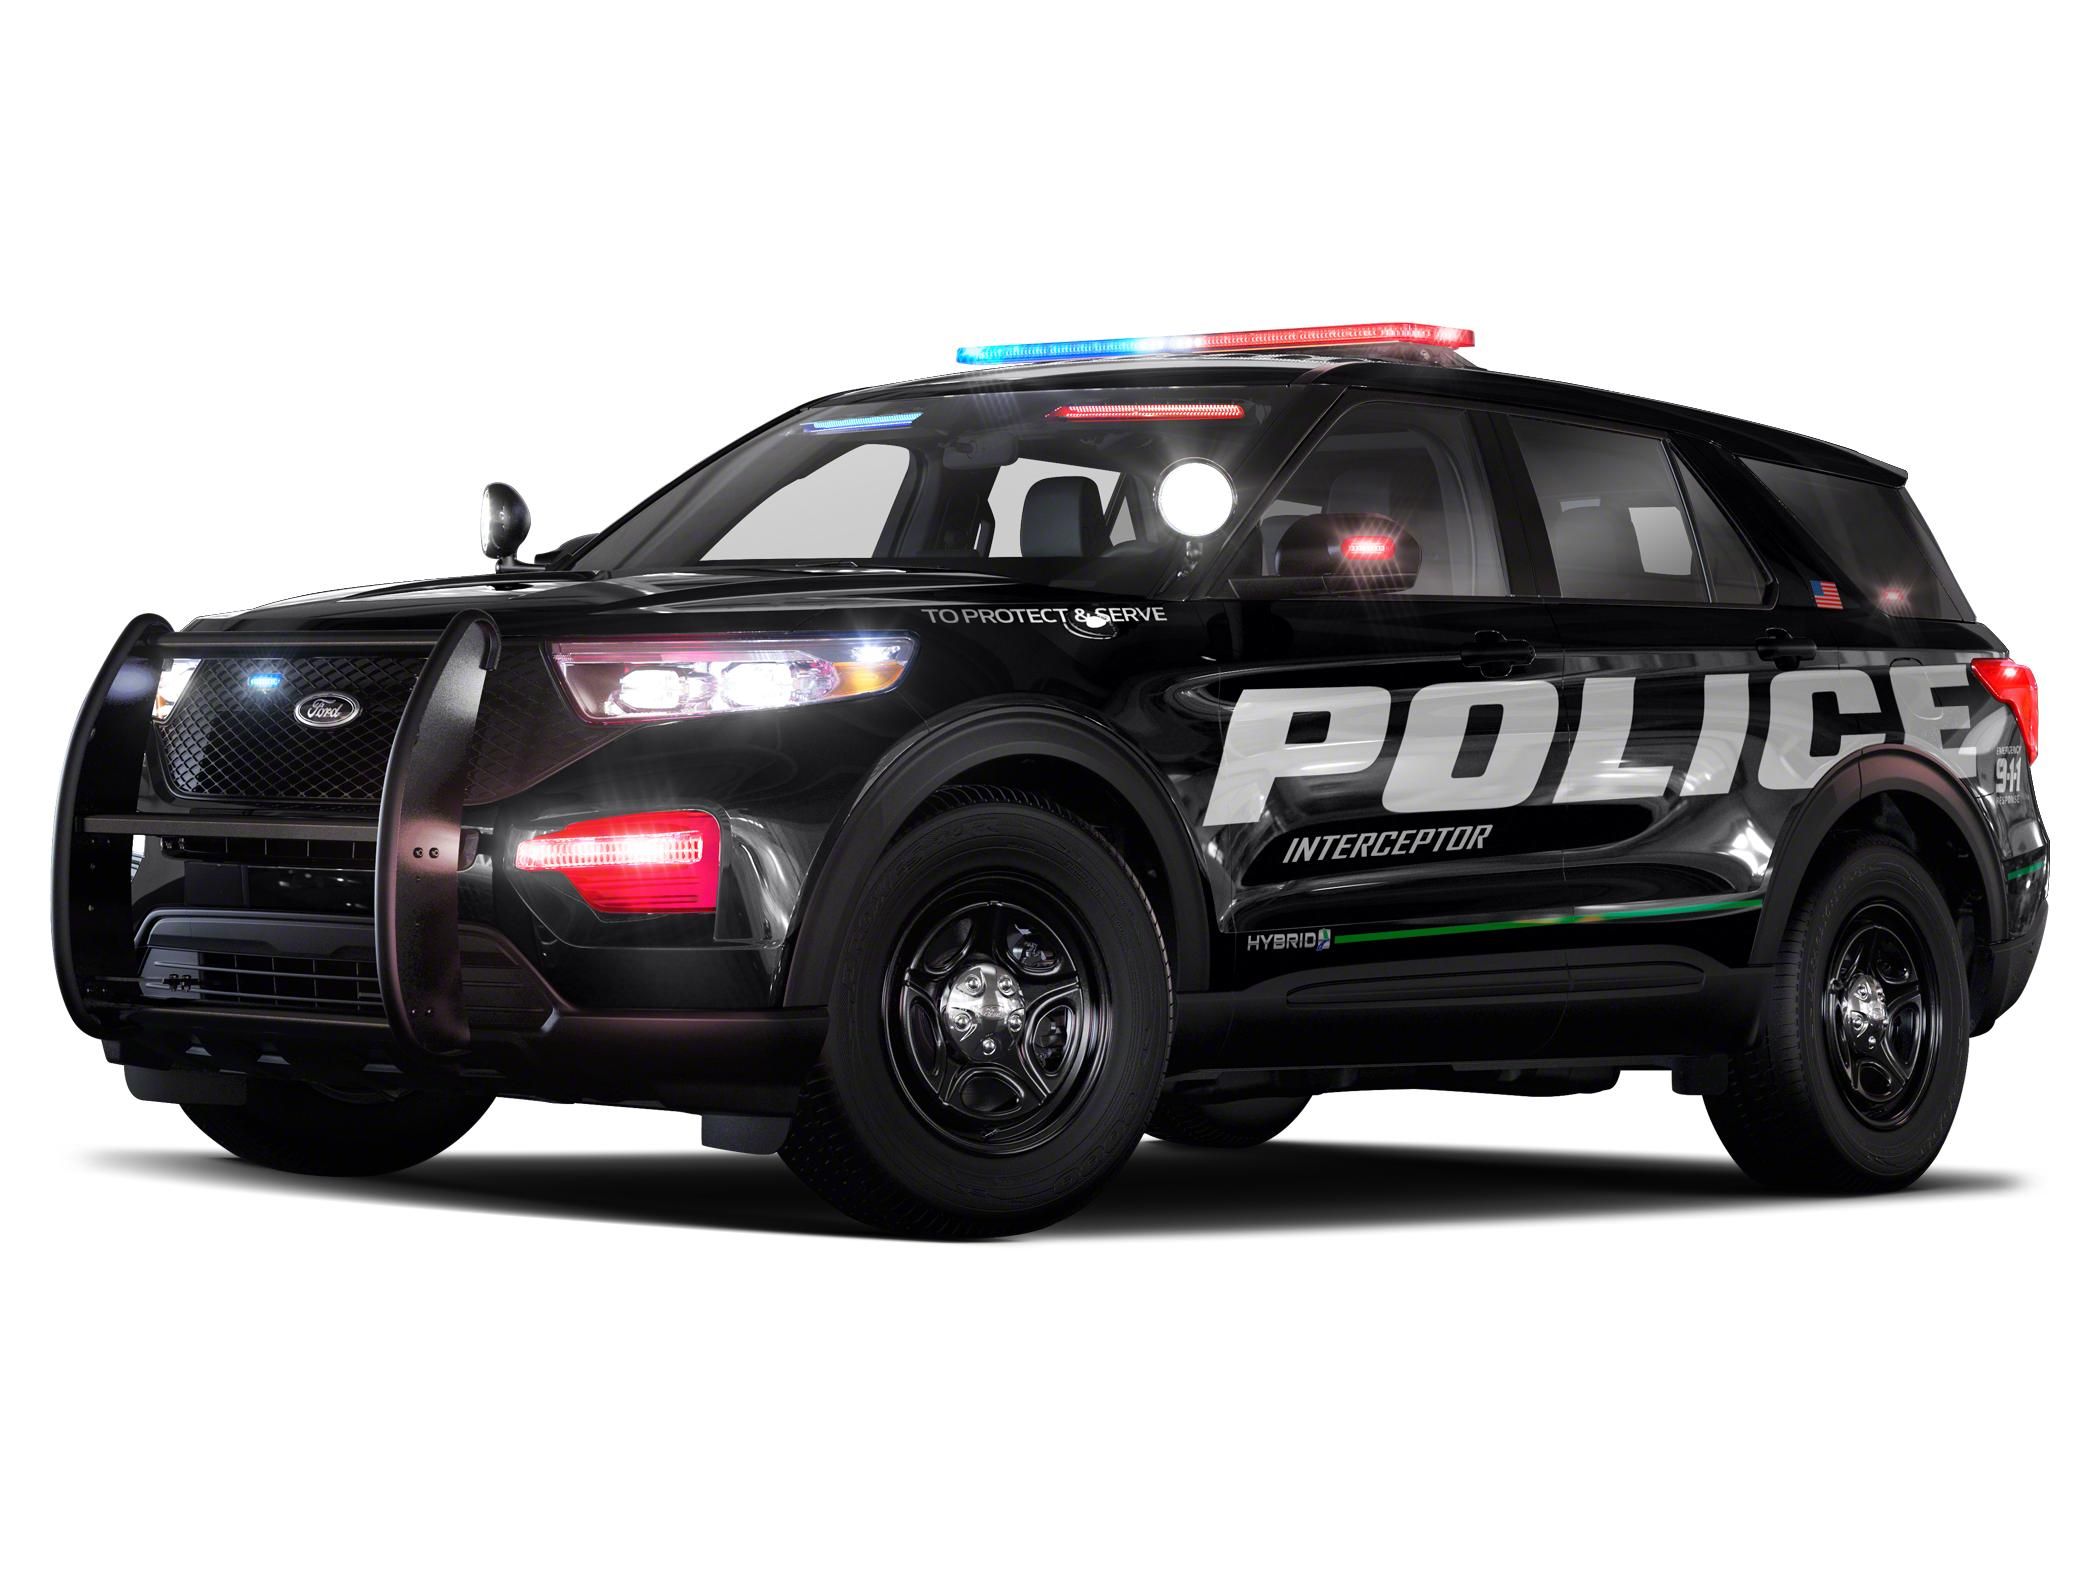 2020 Ford Police Interceptor